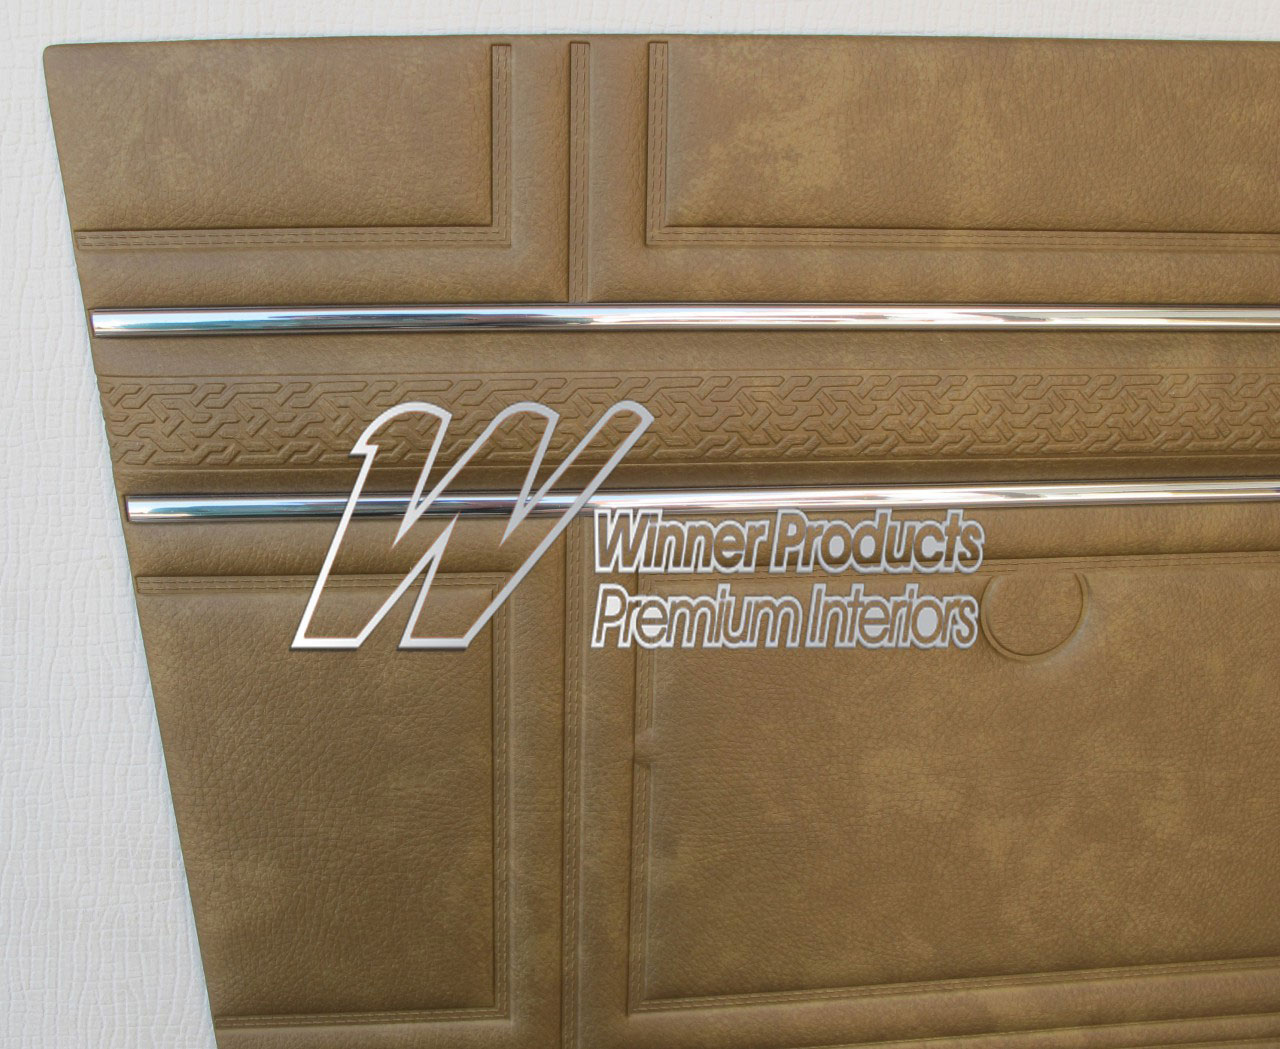 Holden Kingswood HT Kingswood Sedan 11E Antique Gold Door Trims (Image 9 of 16)